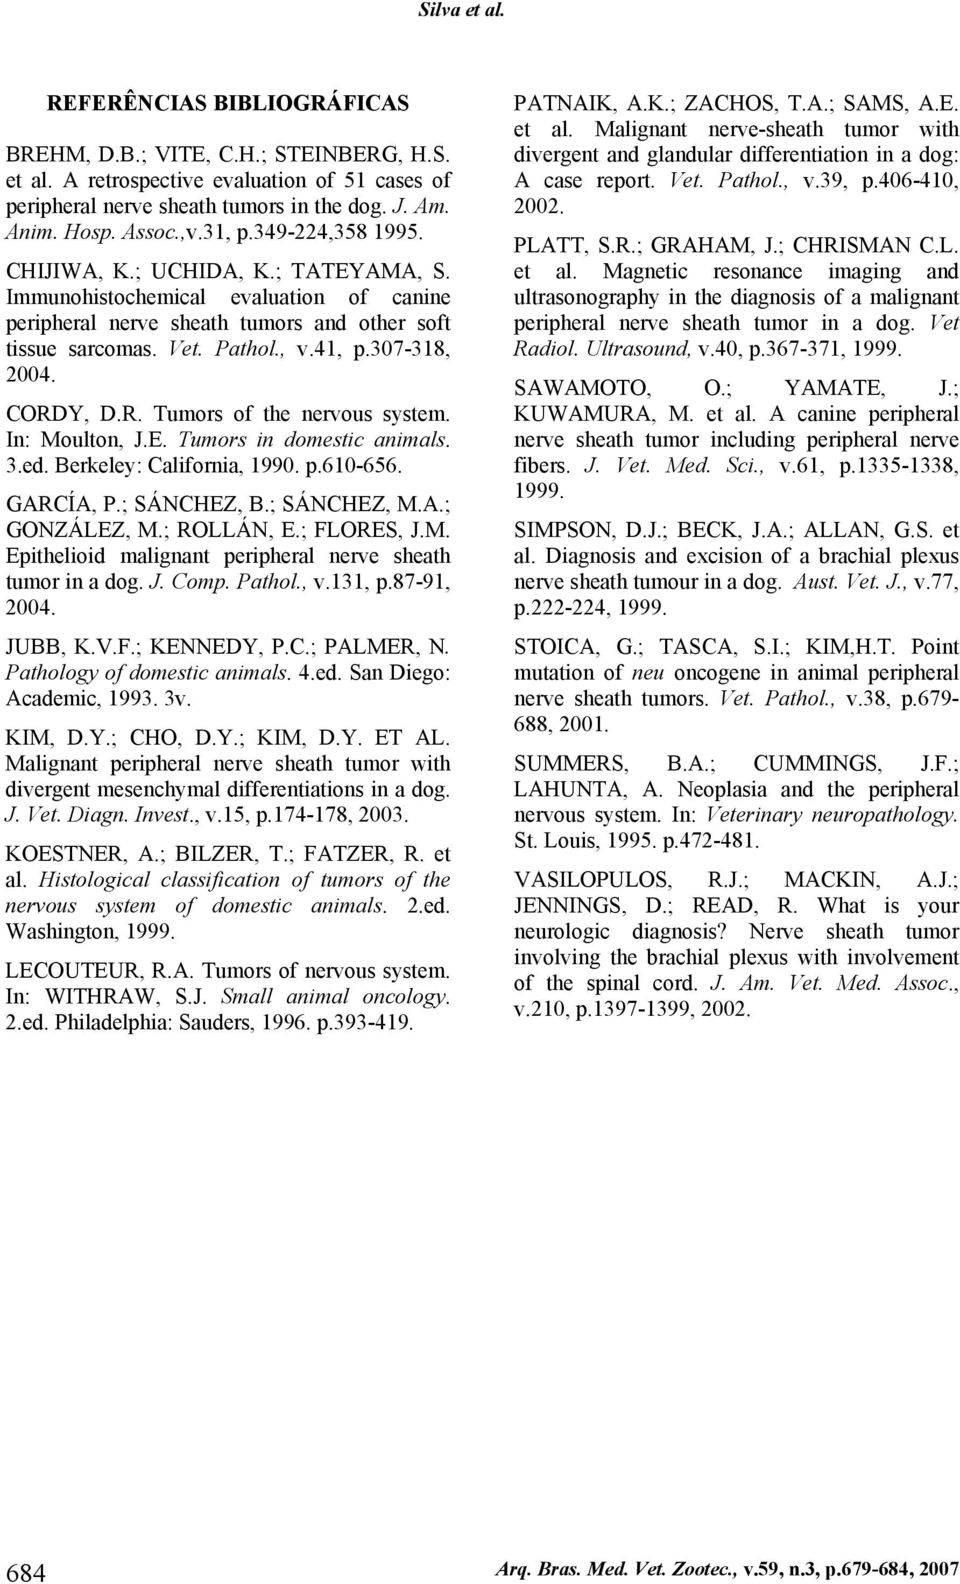 307-318, 2004. CORDY, D.R. Tumors of the nervous system. In: Moulton, J.E. Tumors in domestic animals. 3.ed. Berkeley: California, 1990. p.610-656. GARCÍA, P.; SÁNCHEZ, B.; SÁNCHEZ, M.A.; GONZÁLEZ, M.